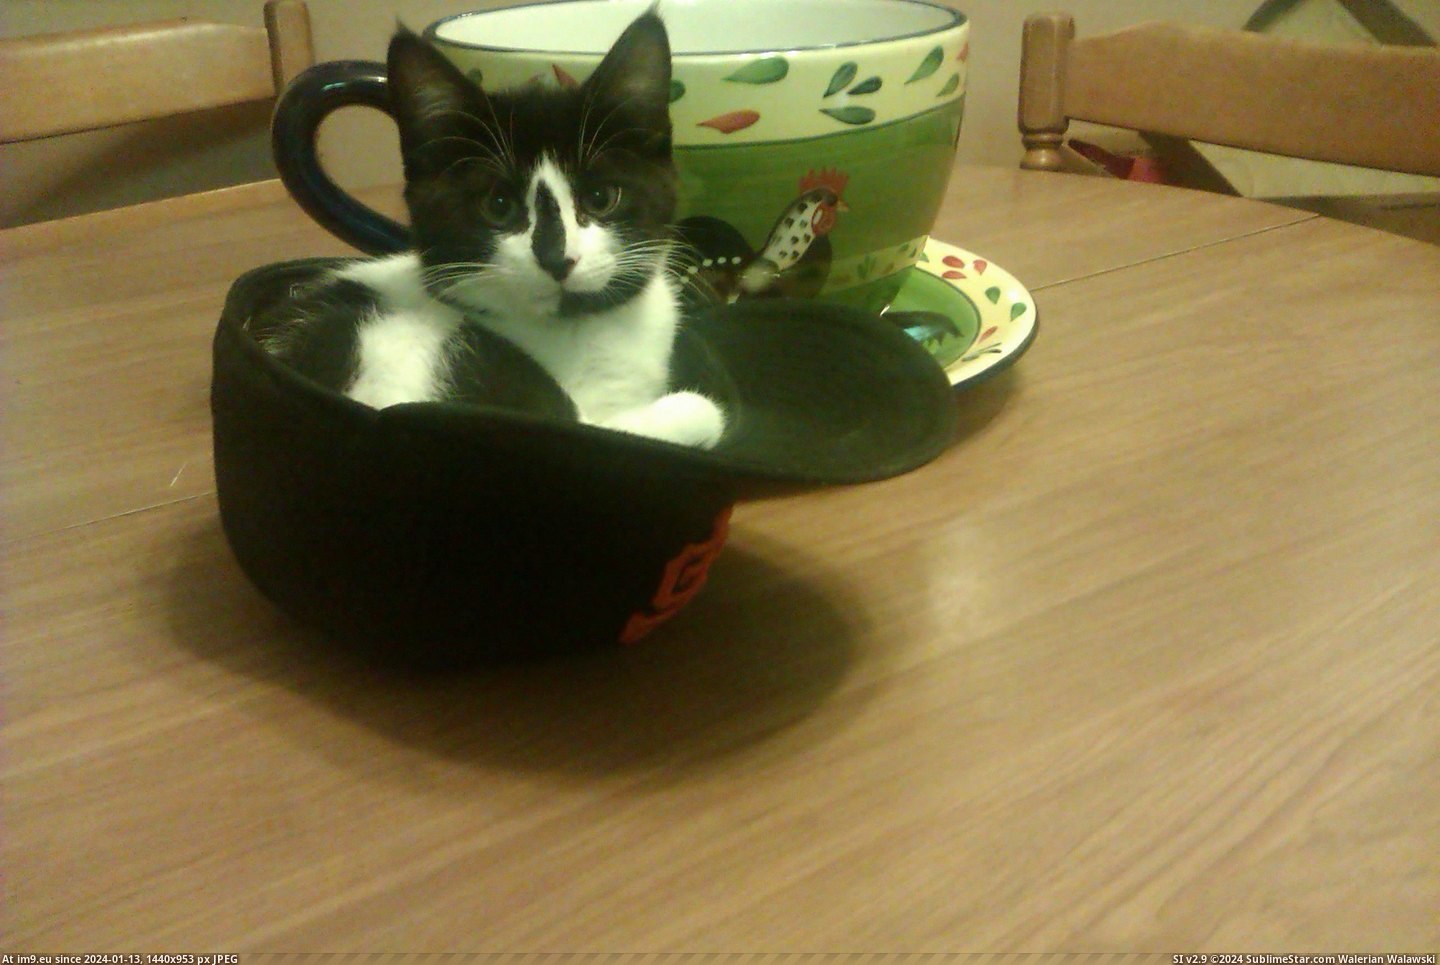 #Cats #Fits #Sits [Cats] If I fits, I sits! Pic. (Изображение из альбом My r/CATS favs))